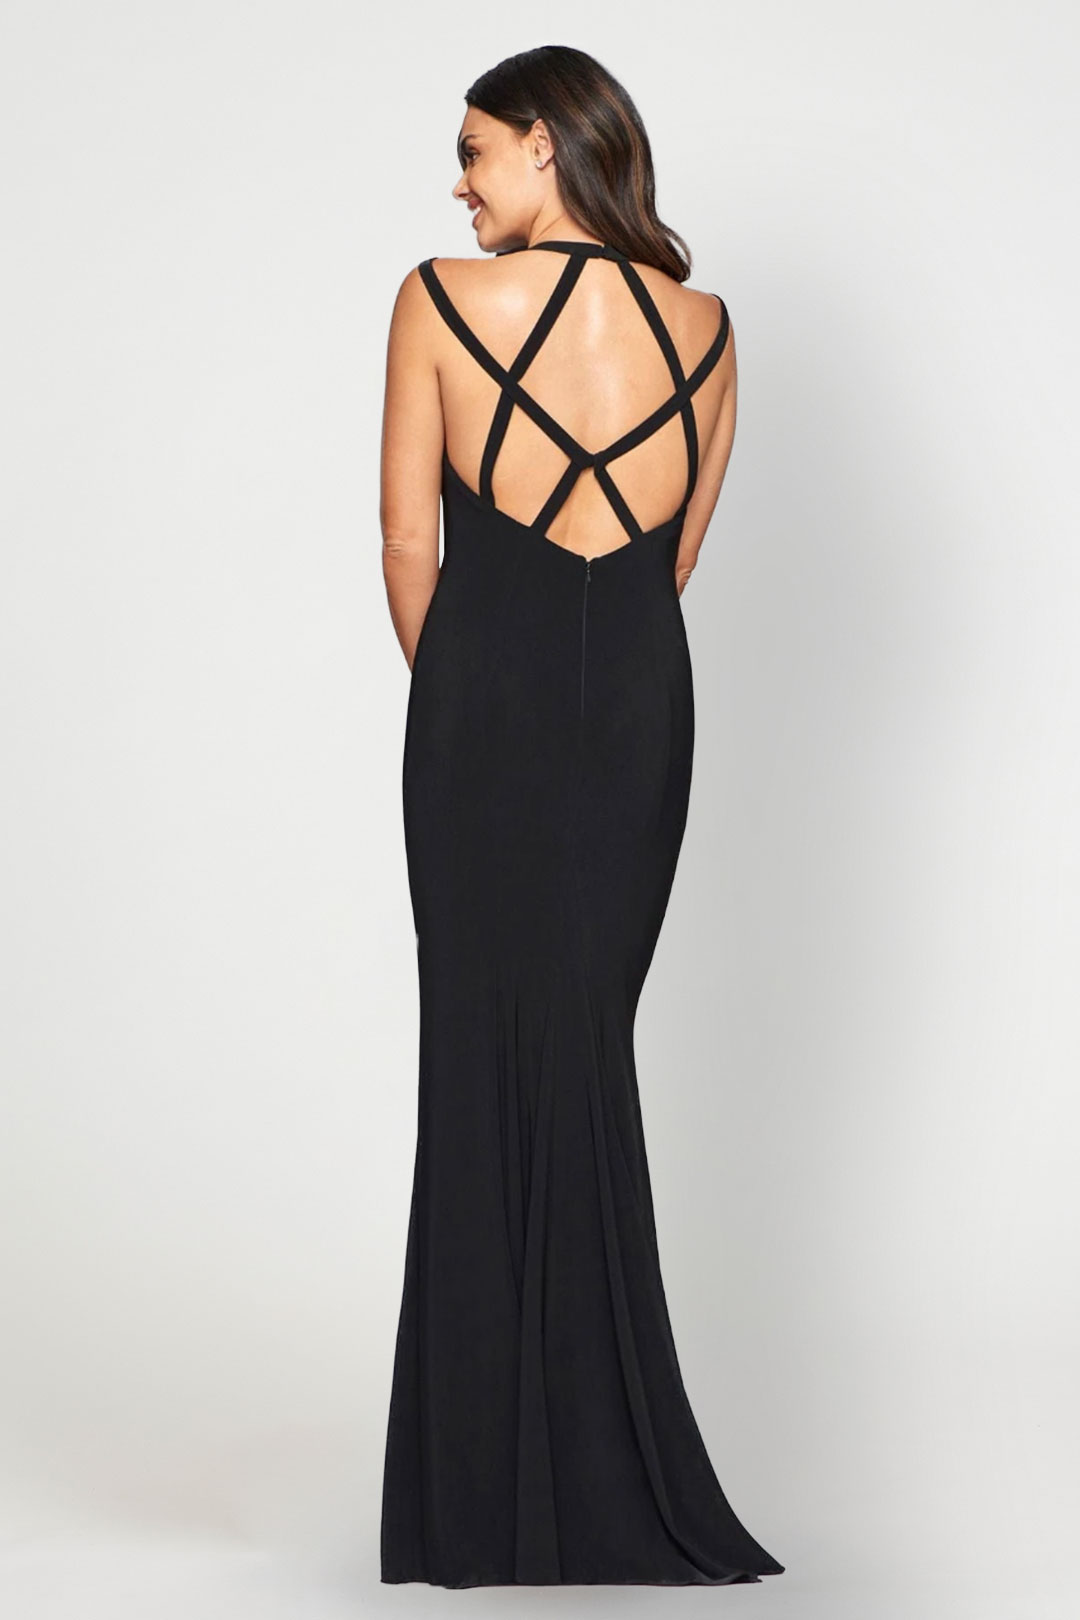 Black Double Strap Long Dress- Faviana Rent A Dress Dress Rental Gown Rental Back cross